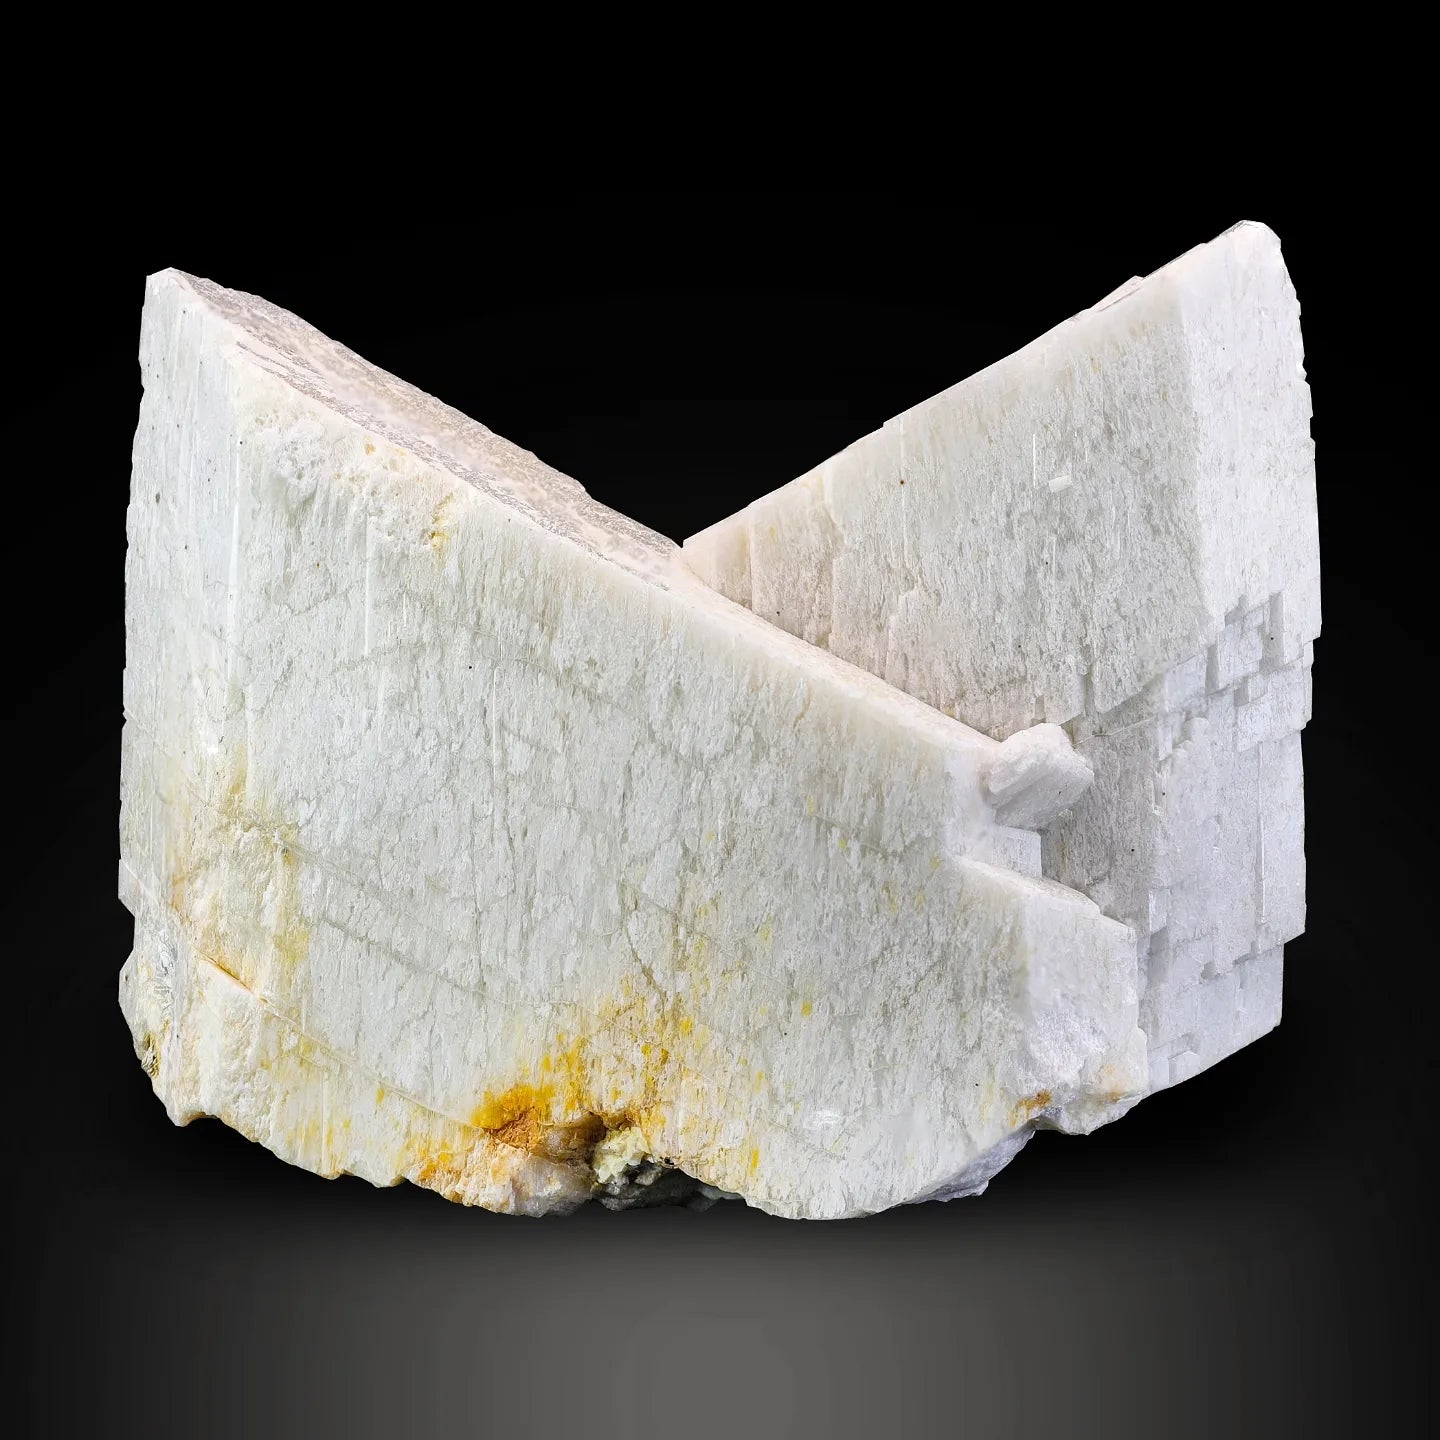 The Exfoliating Mineral Twinned Microcline Feldspar Crystal from Pakistan